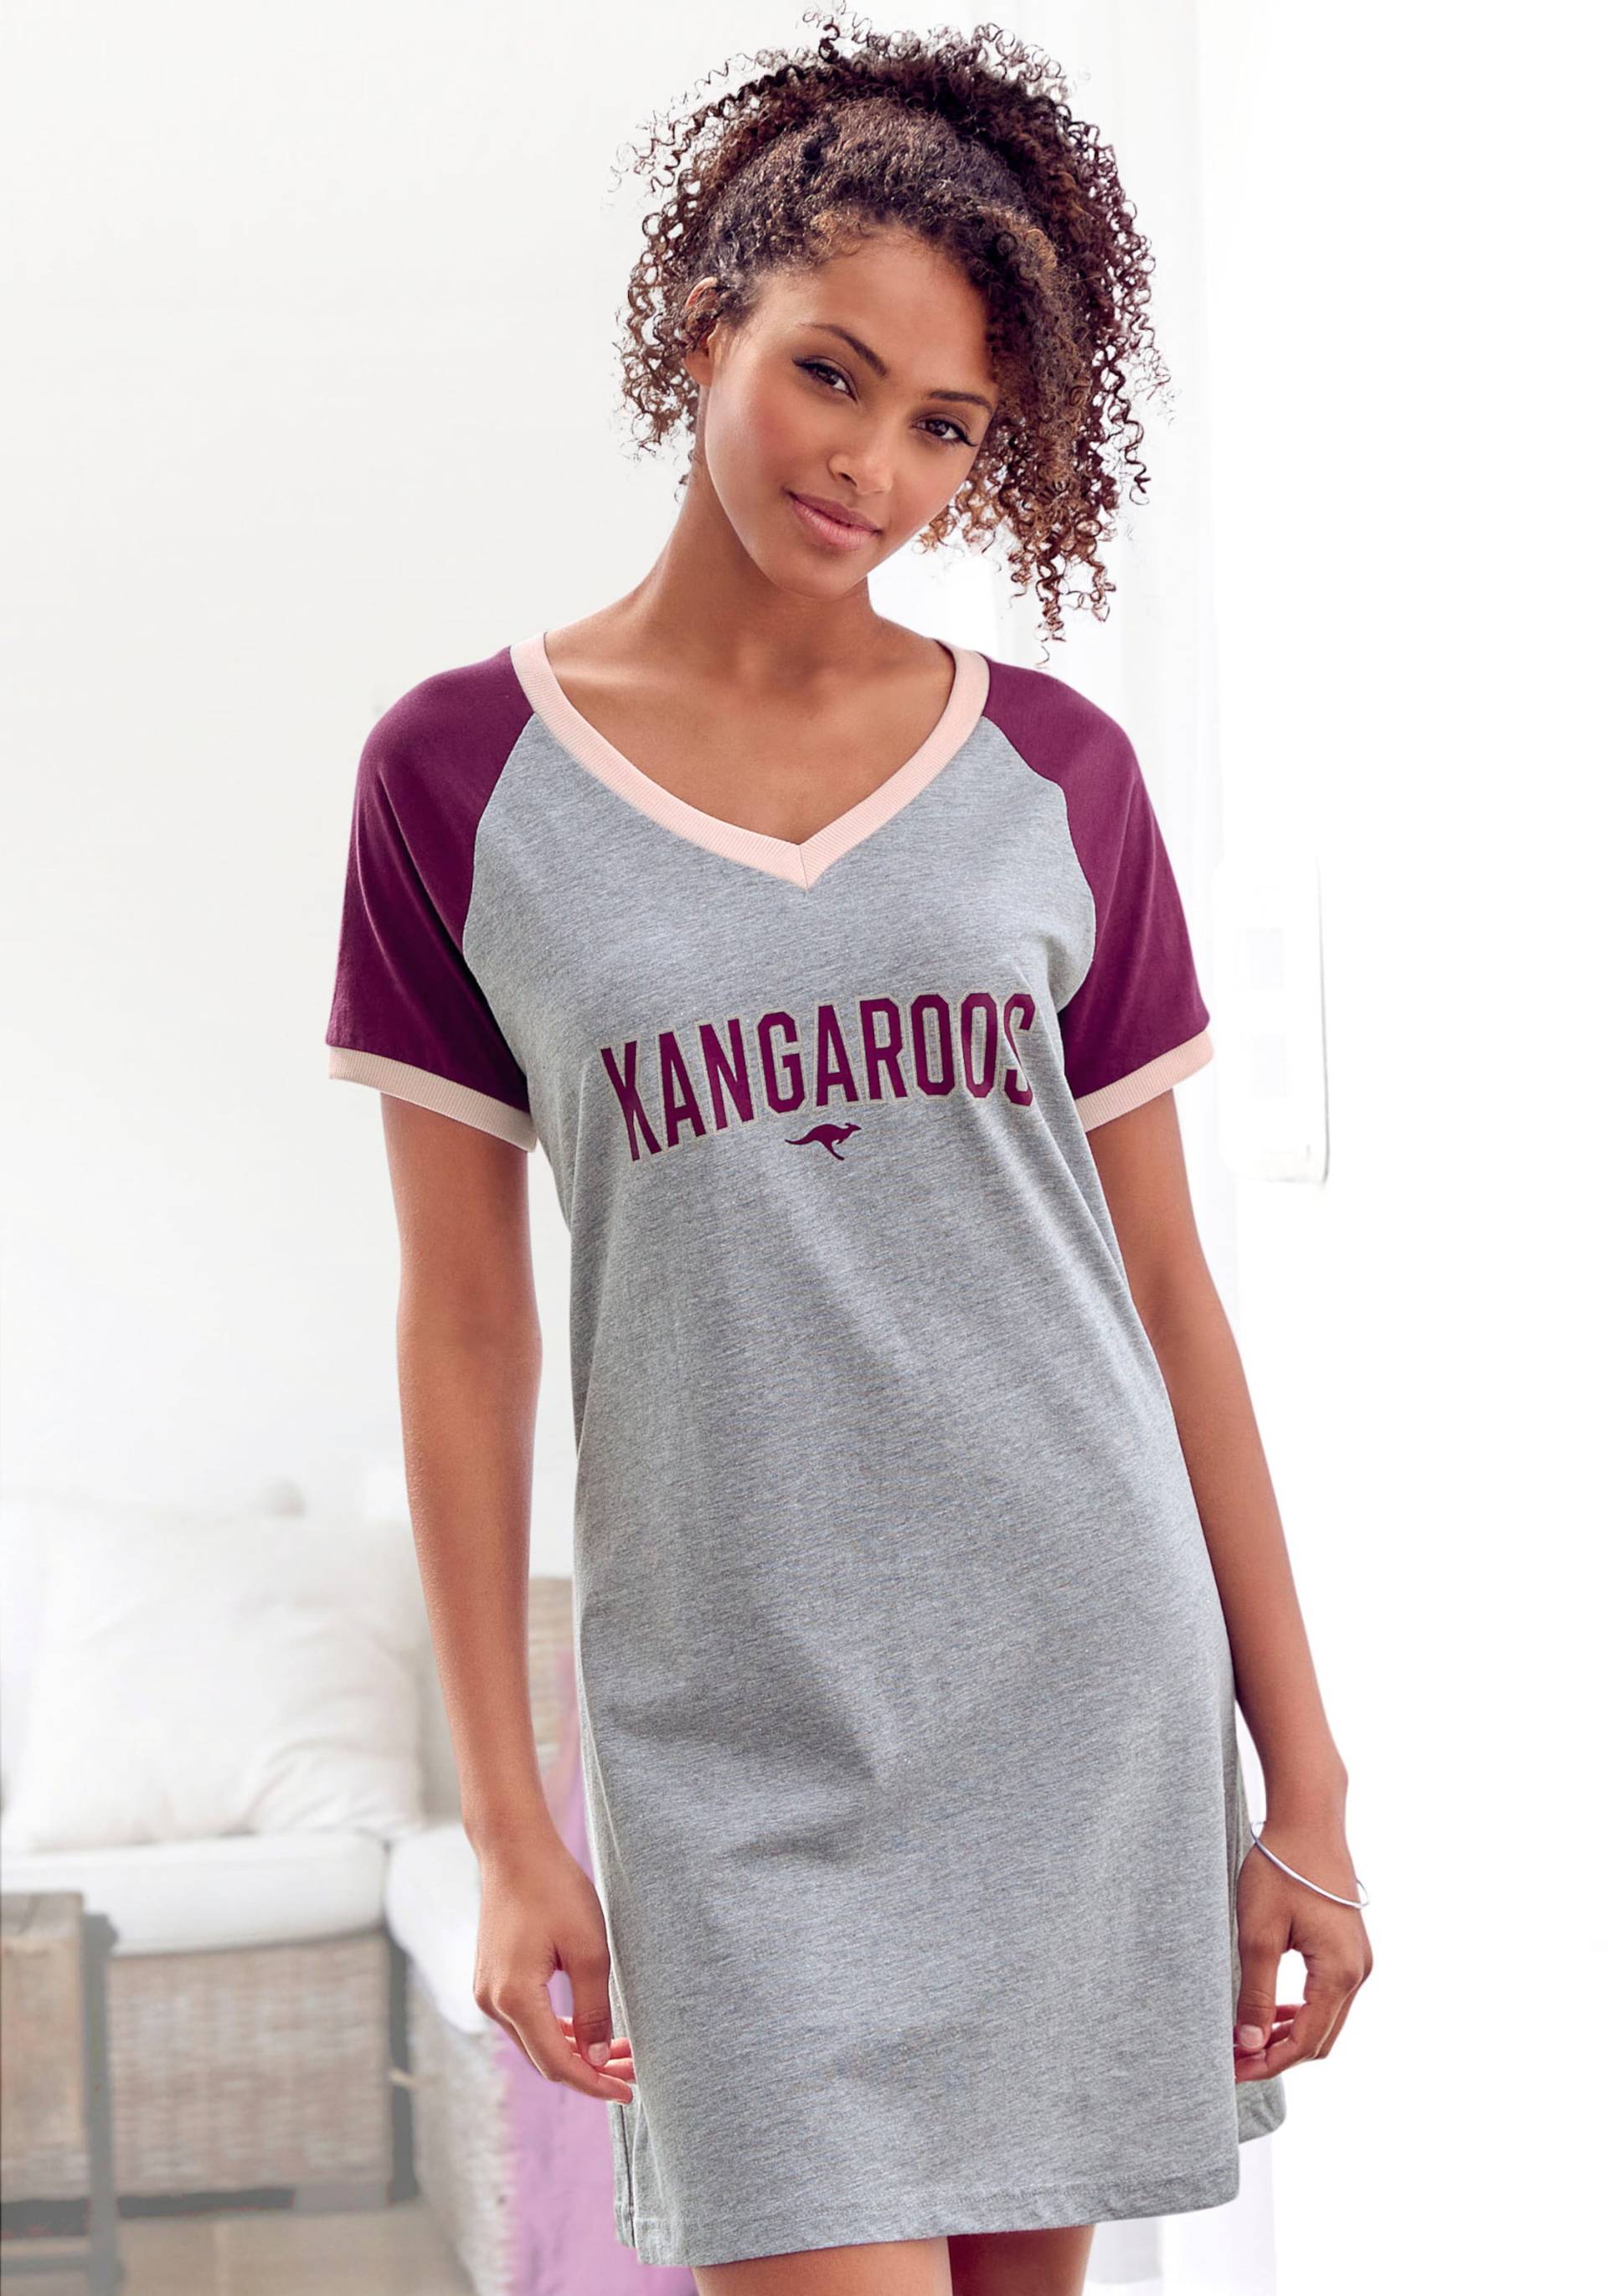 Bigshirt in bordeaux-grau-meliert von KangaROOS von Kangaroos